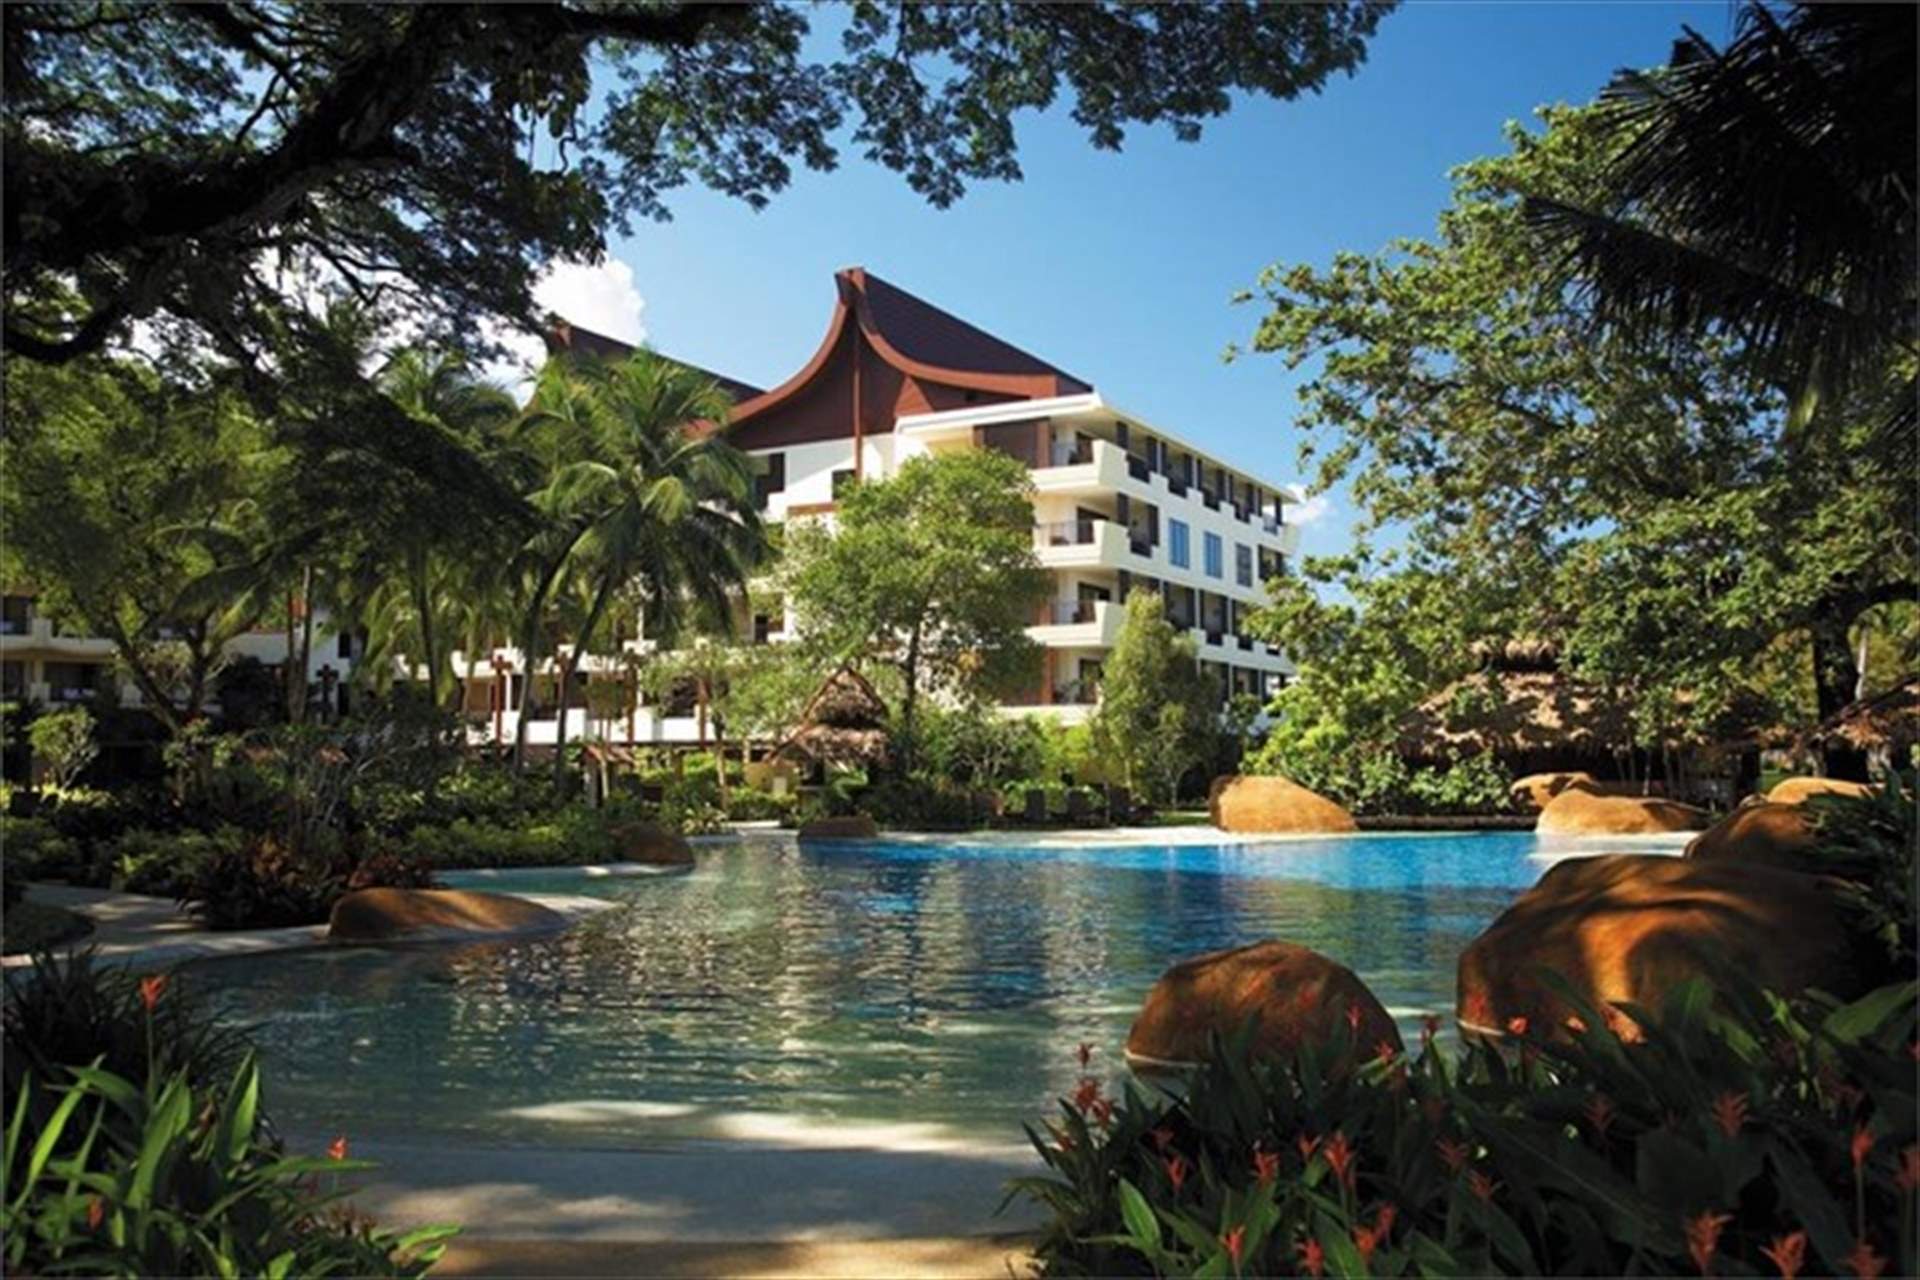 منتجع  Shangri-La Rasa Sayang Resort  